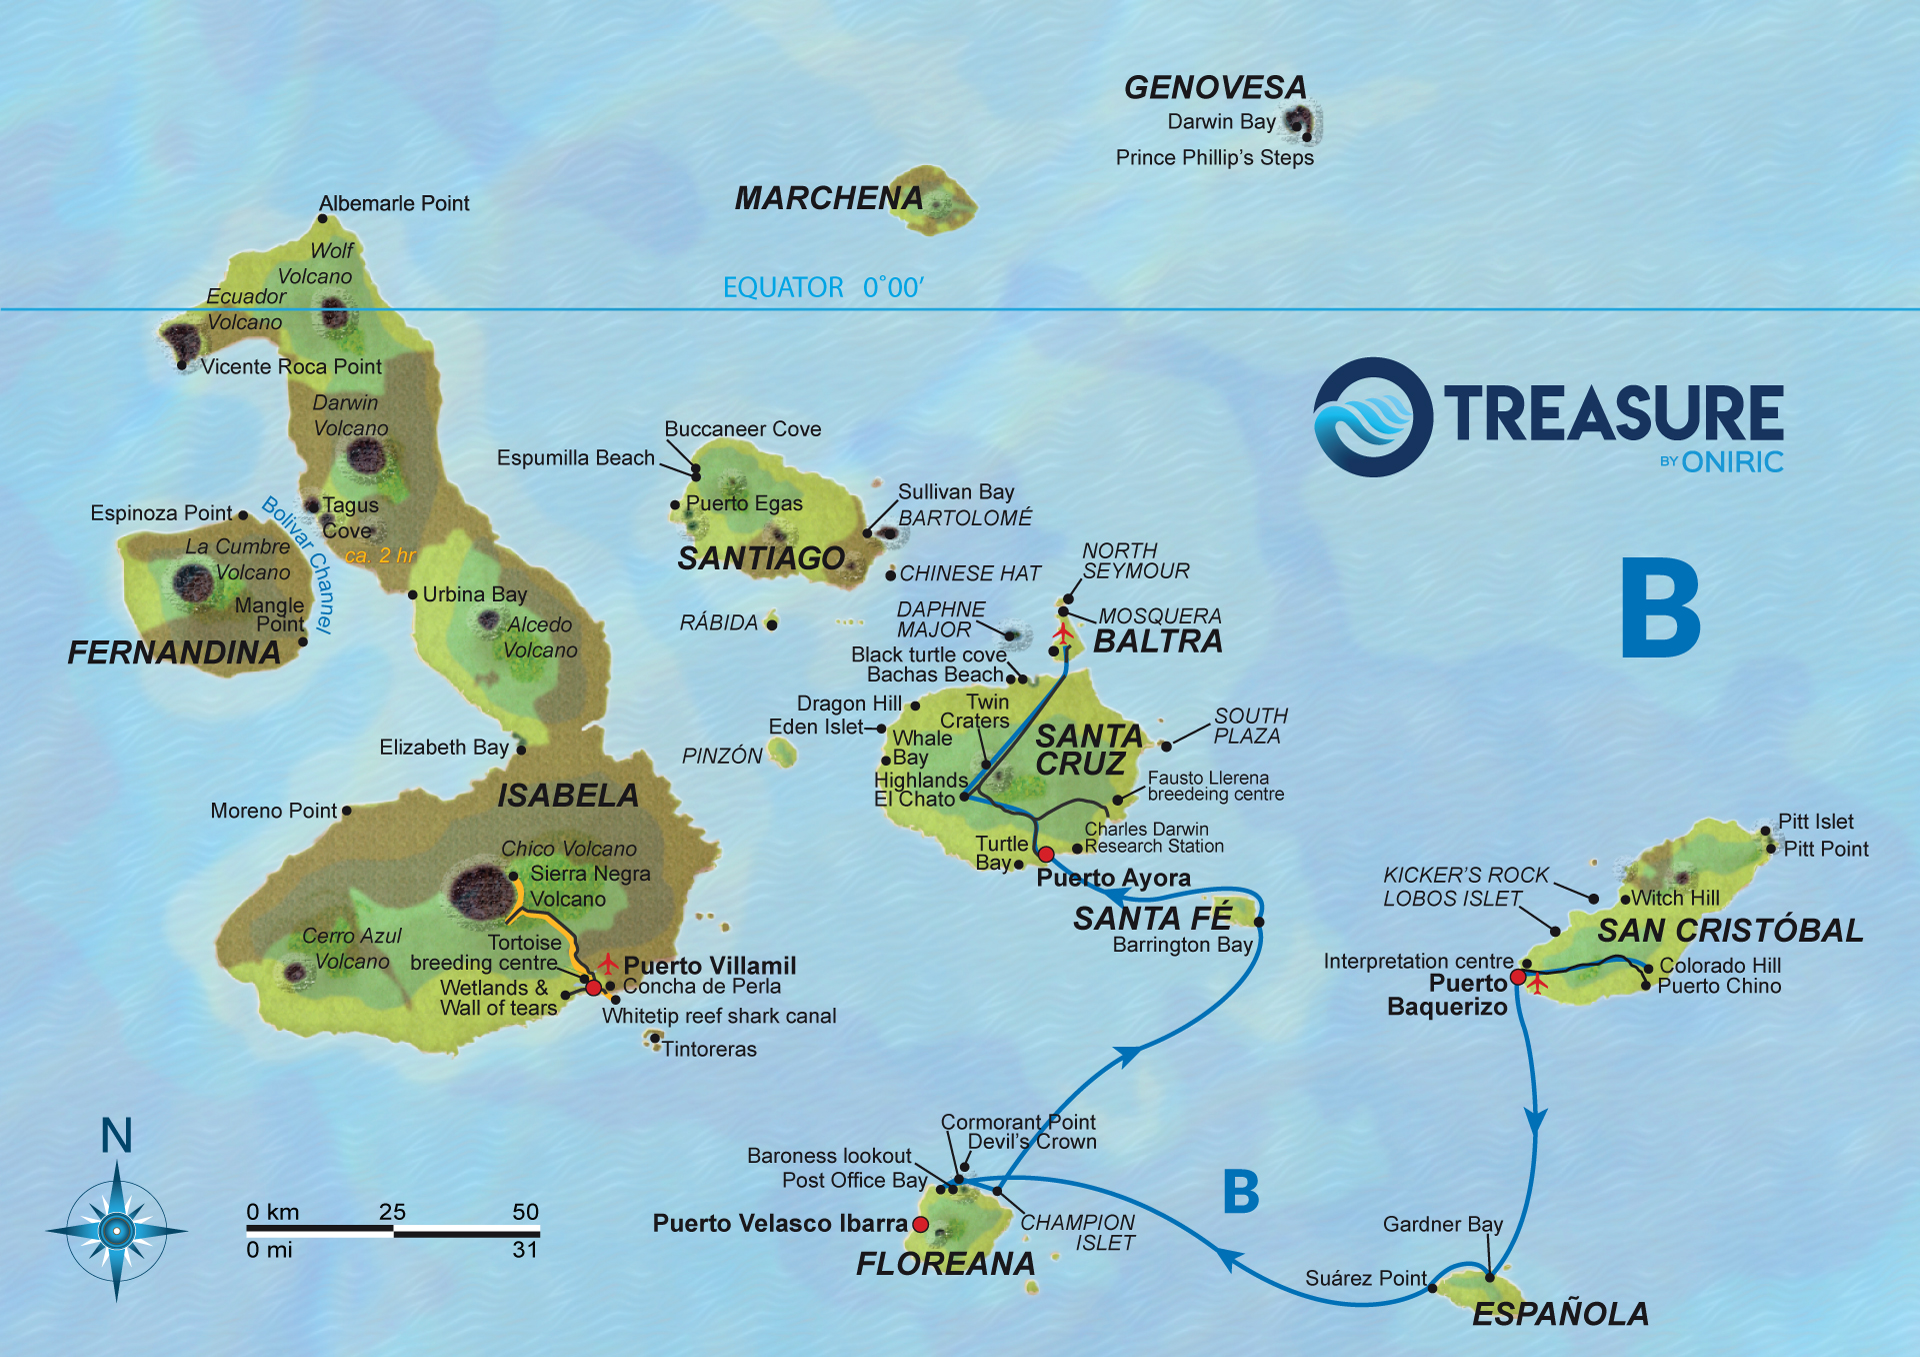 Map-Galapagos-Treasure-oniric